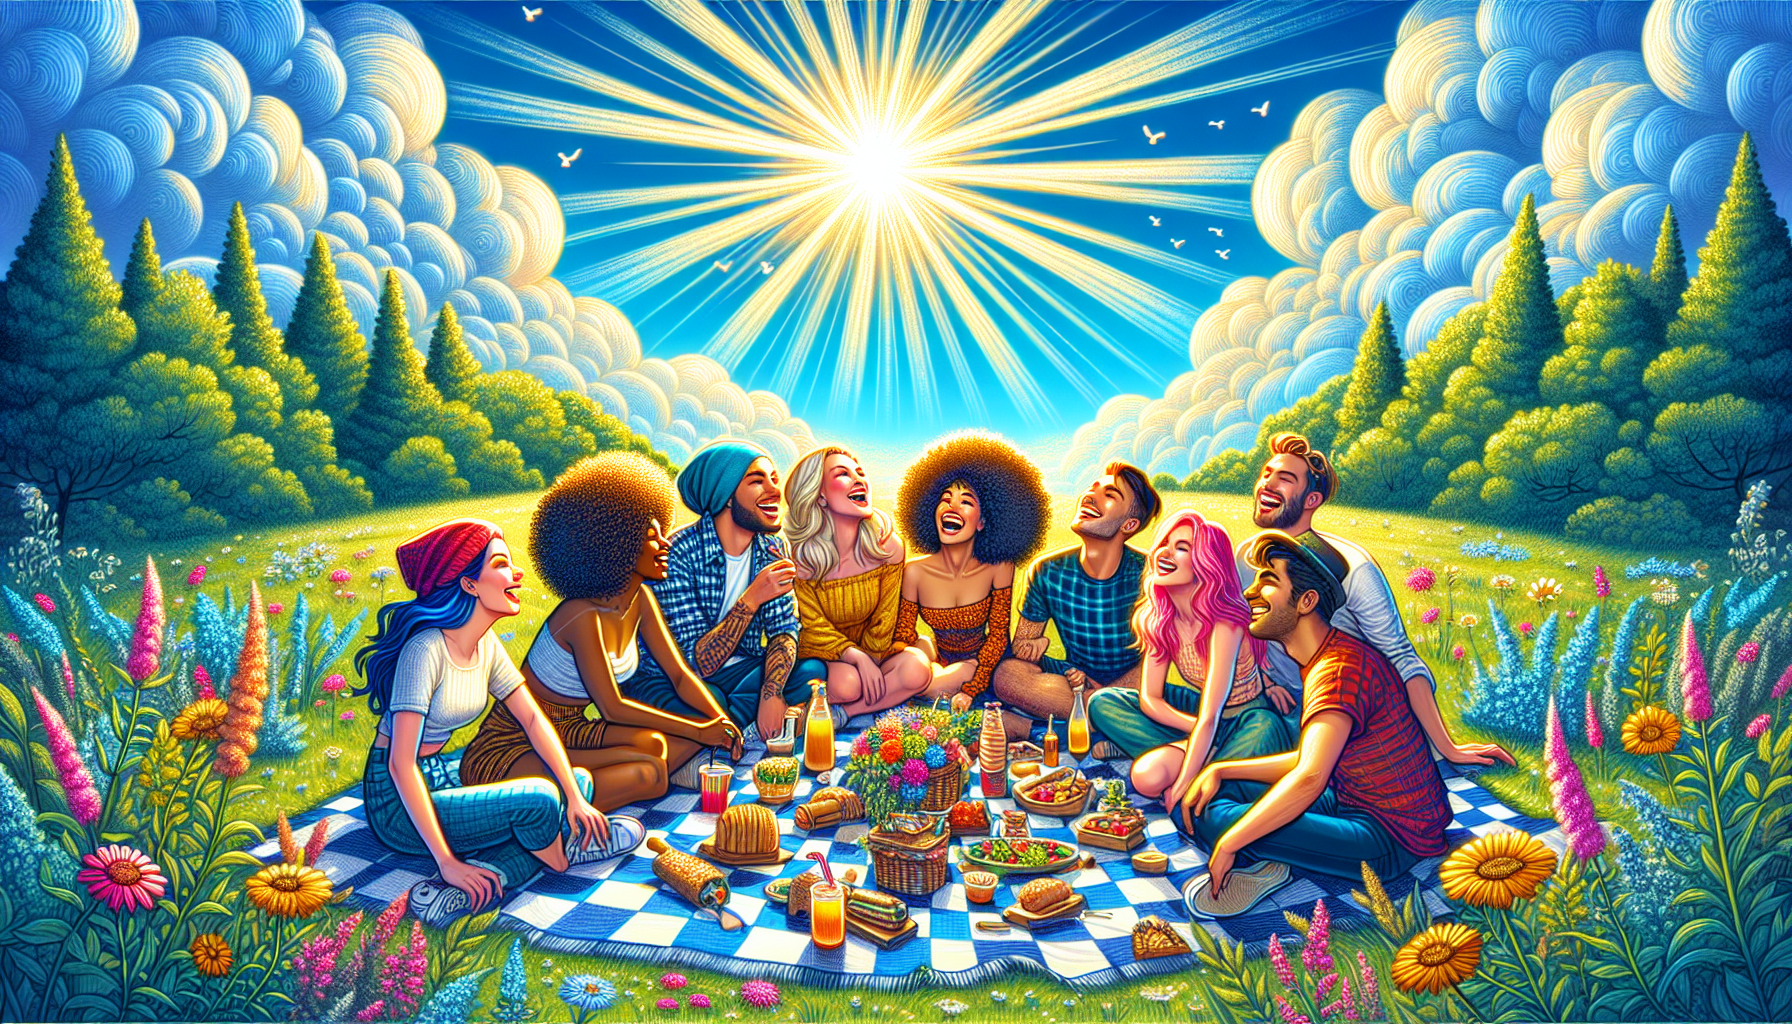 A group of friends enjoying a picnic under a sunny sky